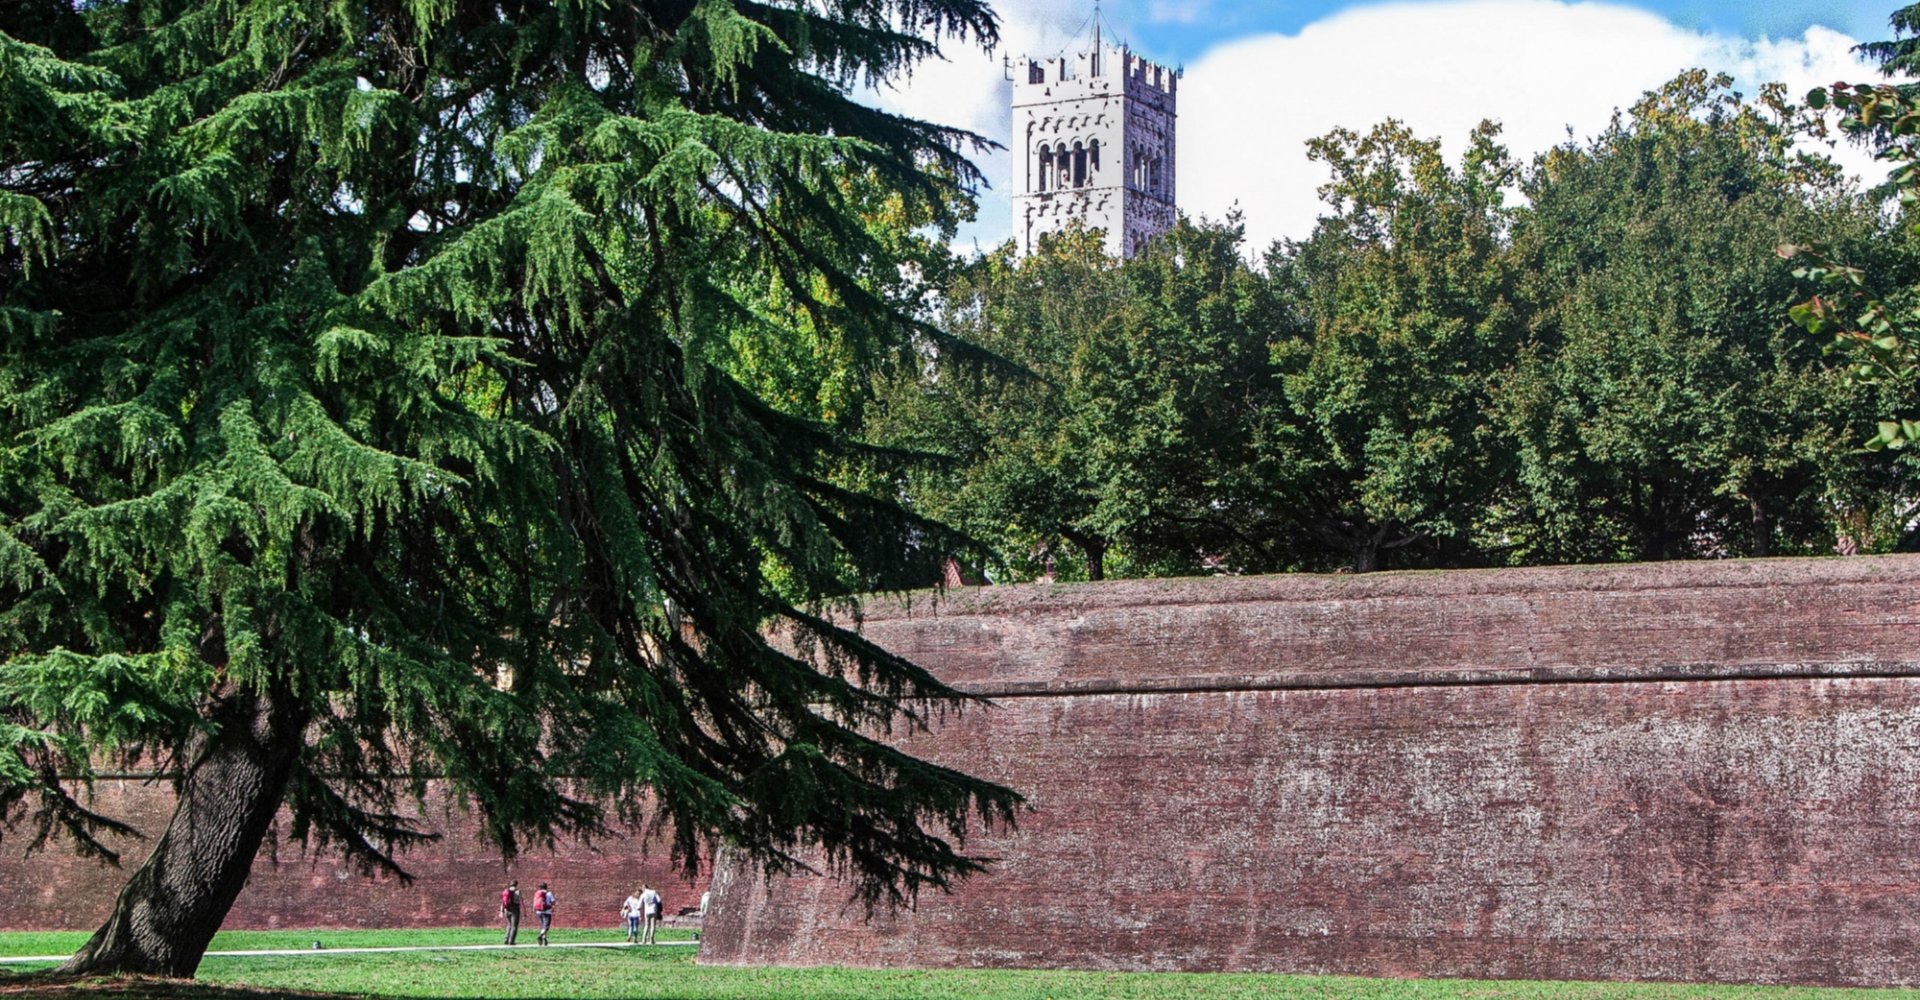 Lucca's walls